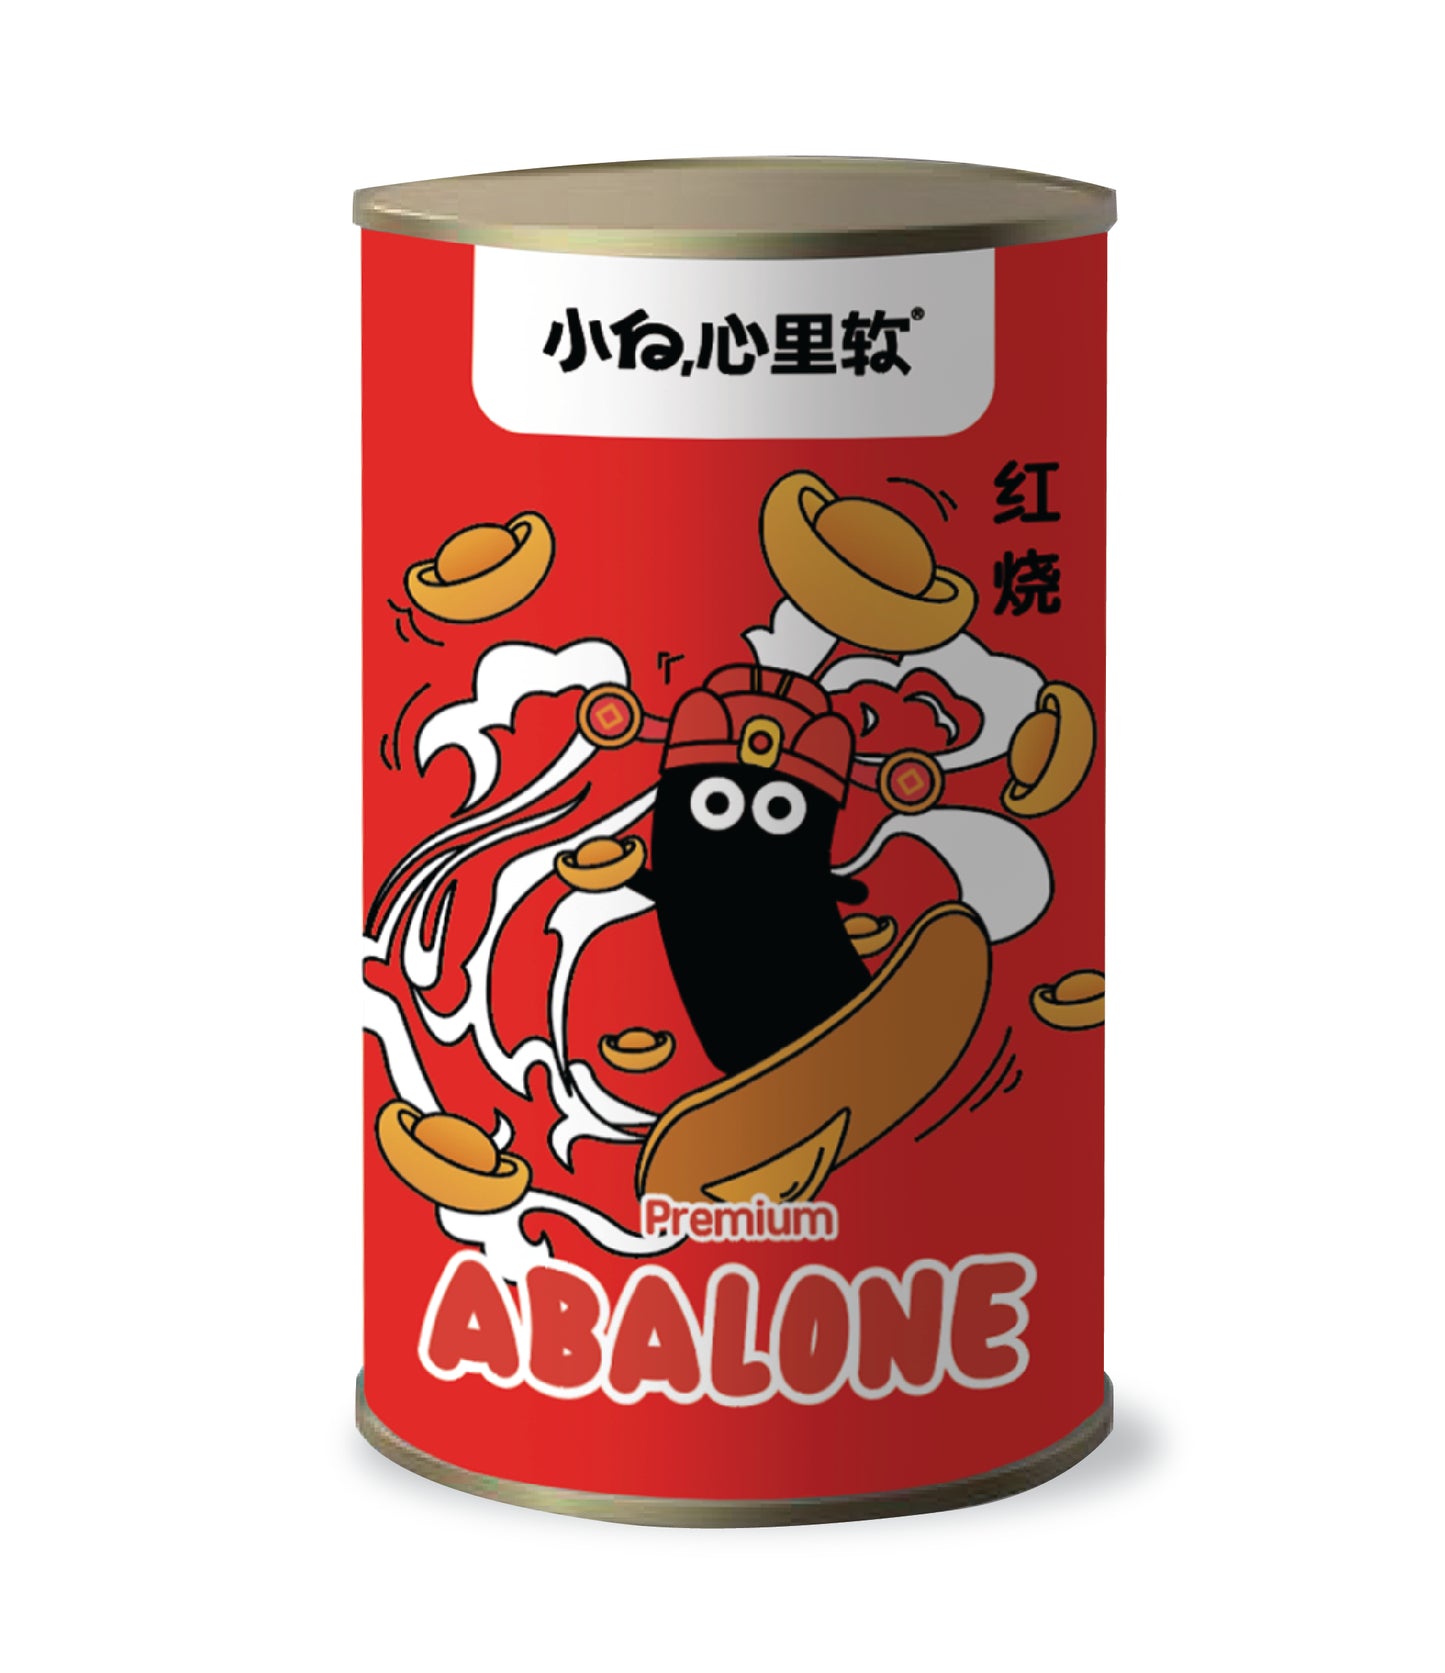 Bundle  Sales ！Xiao Bai Premium abalone ( Clear Soup / Brasied) *10 *pcs